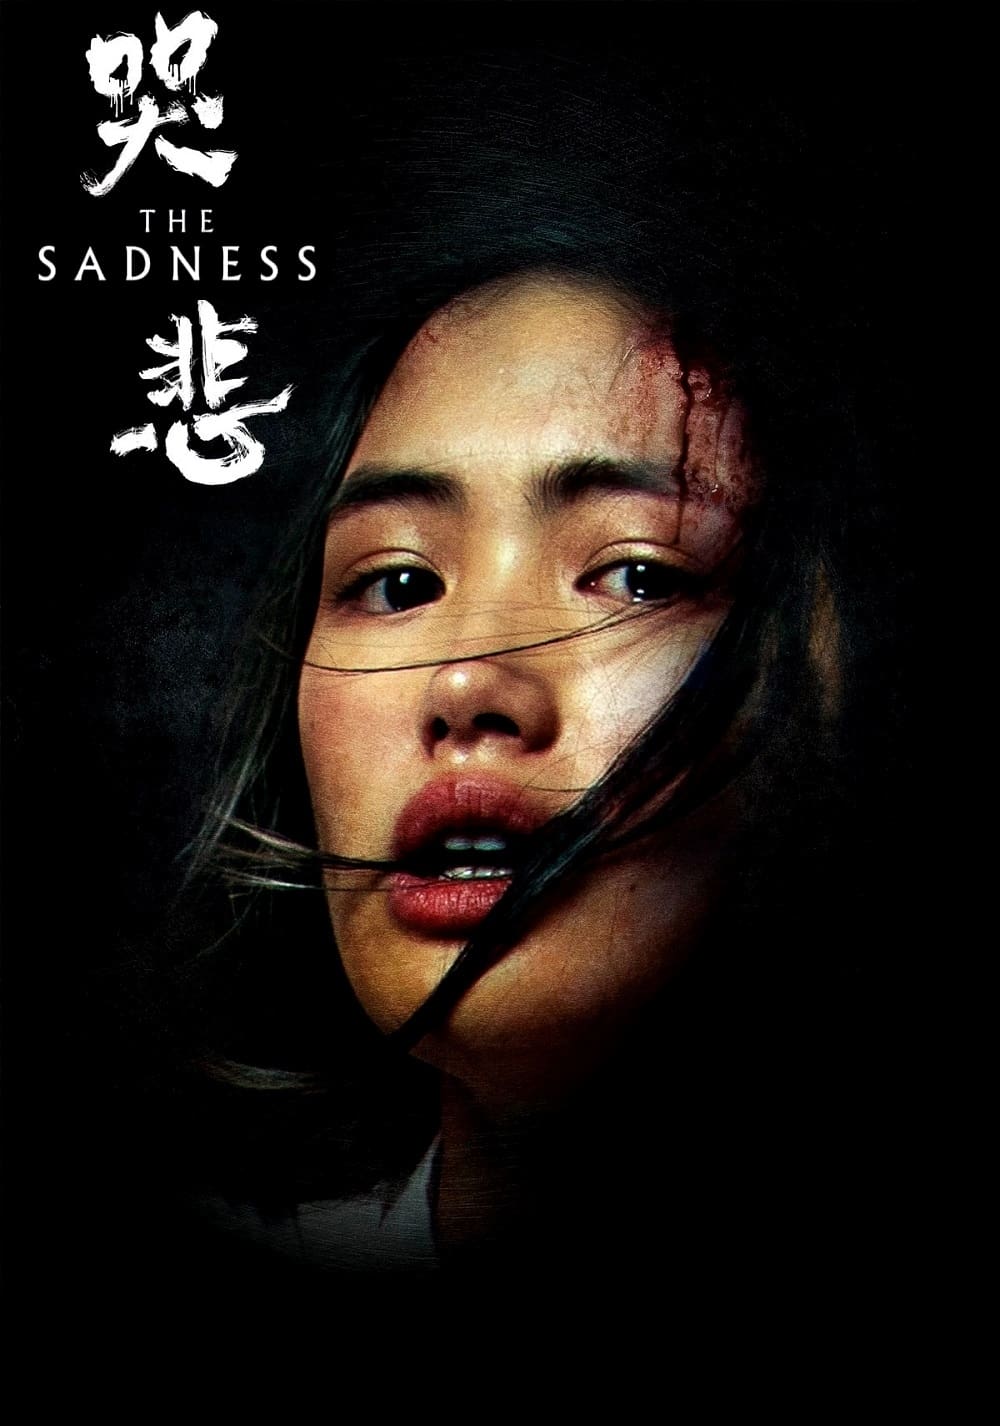 Image فيلم The Sadness 2021 مترجم اون لاين